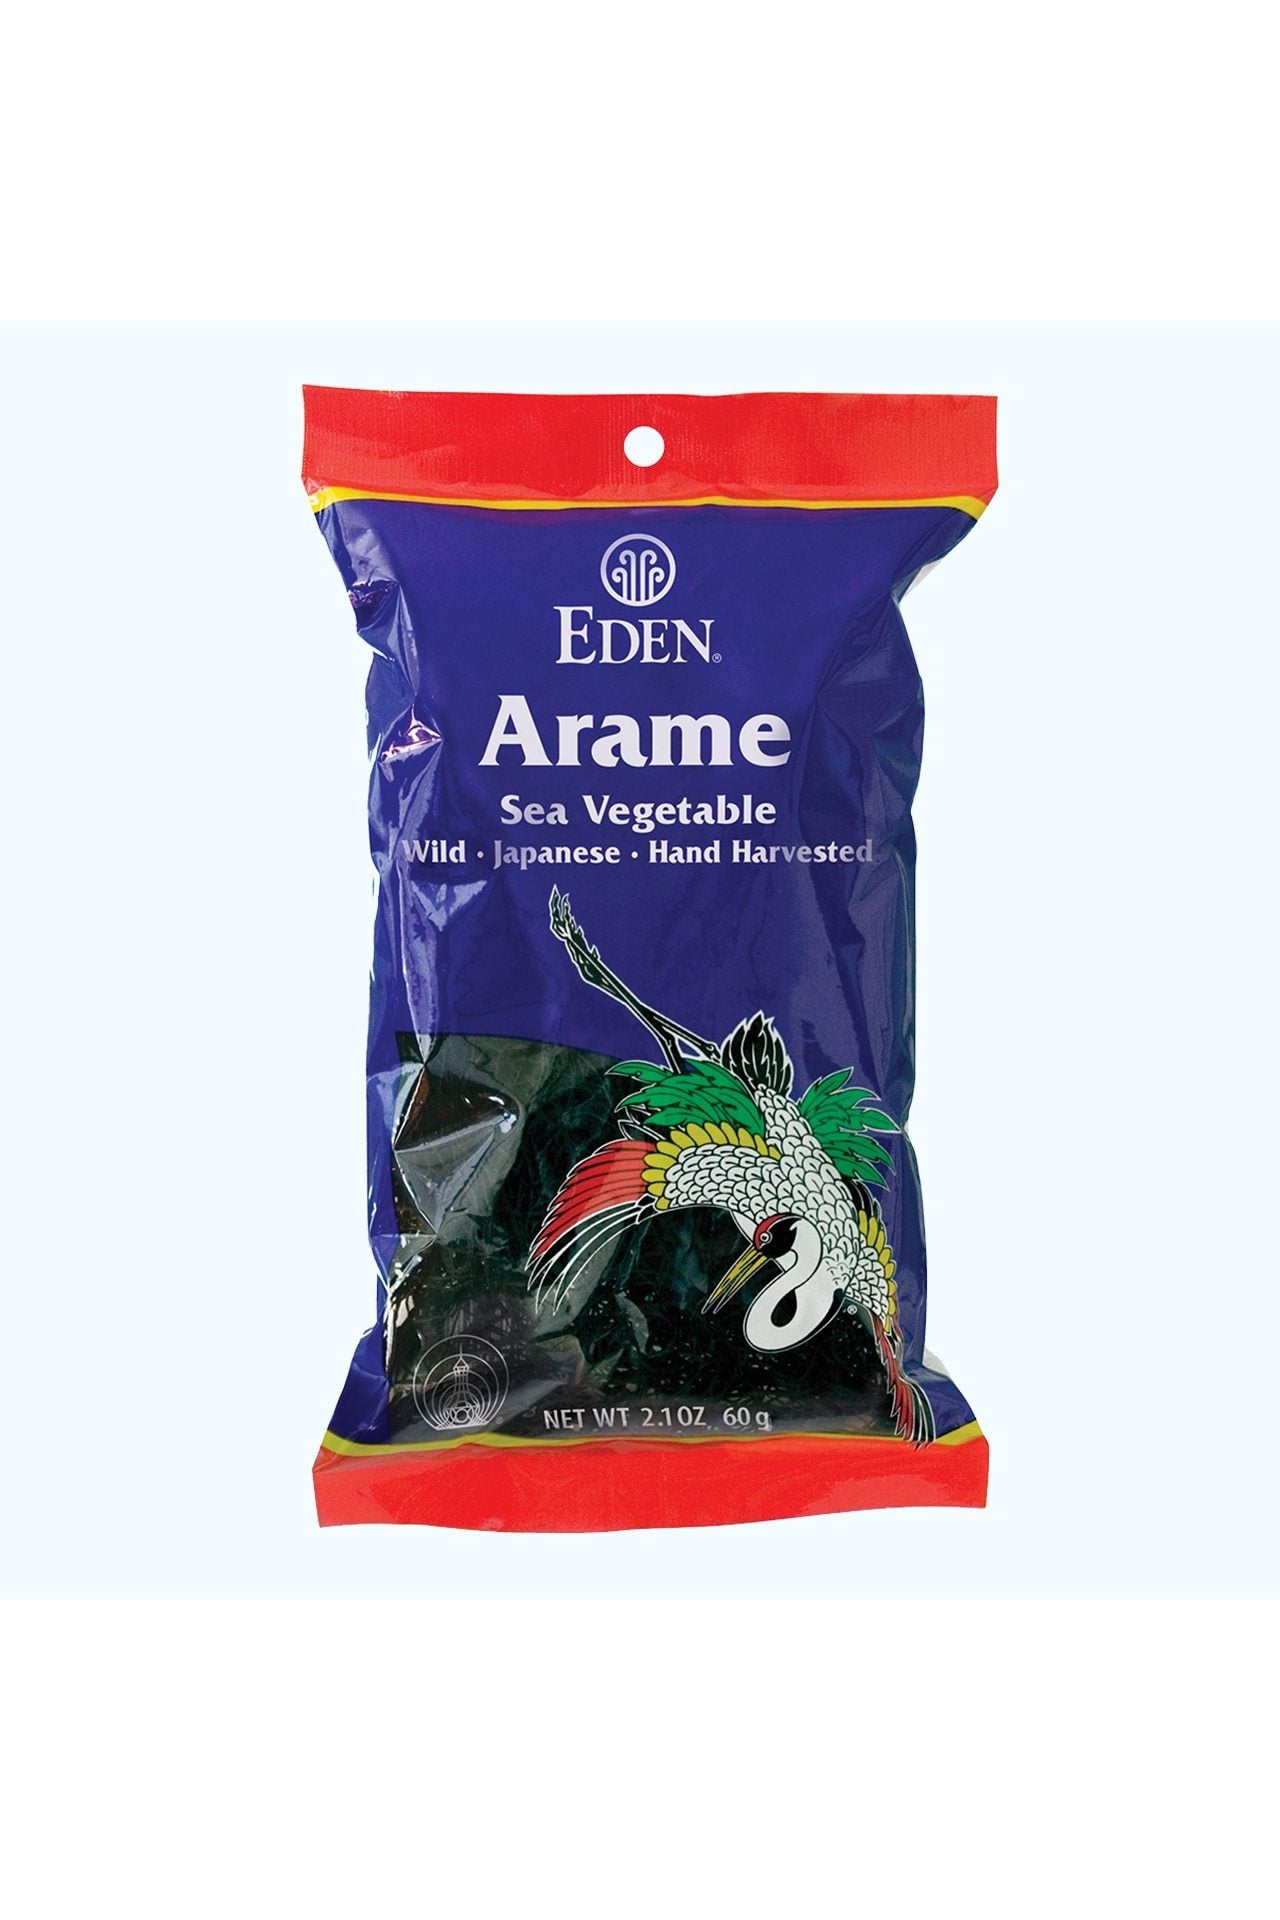 Eden Arame Sea Vegetable 60g